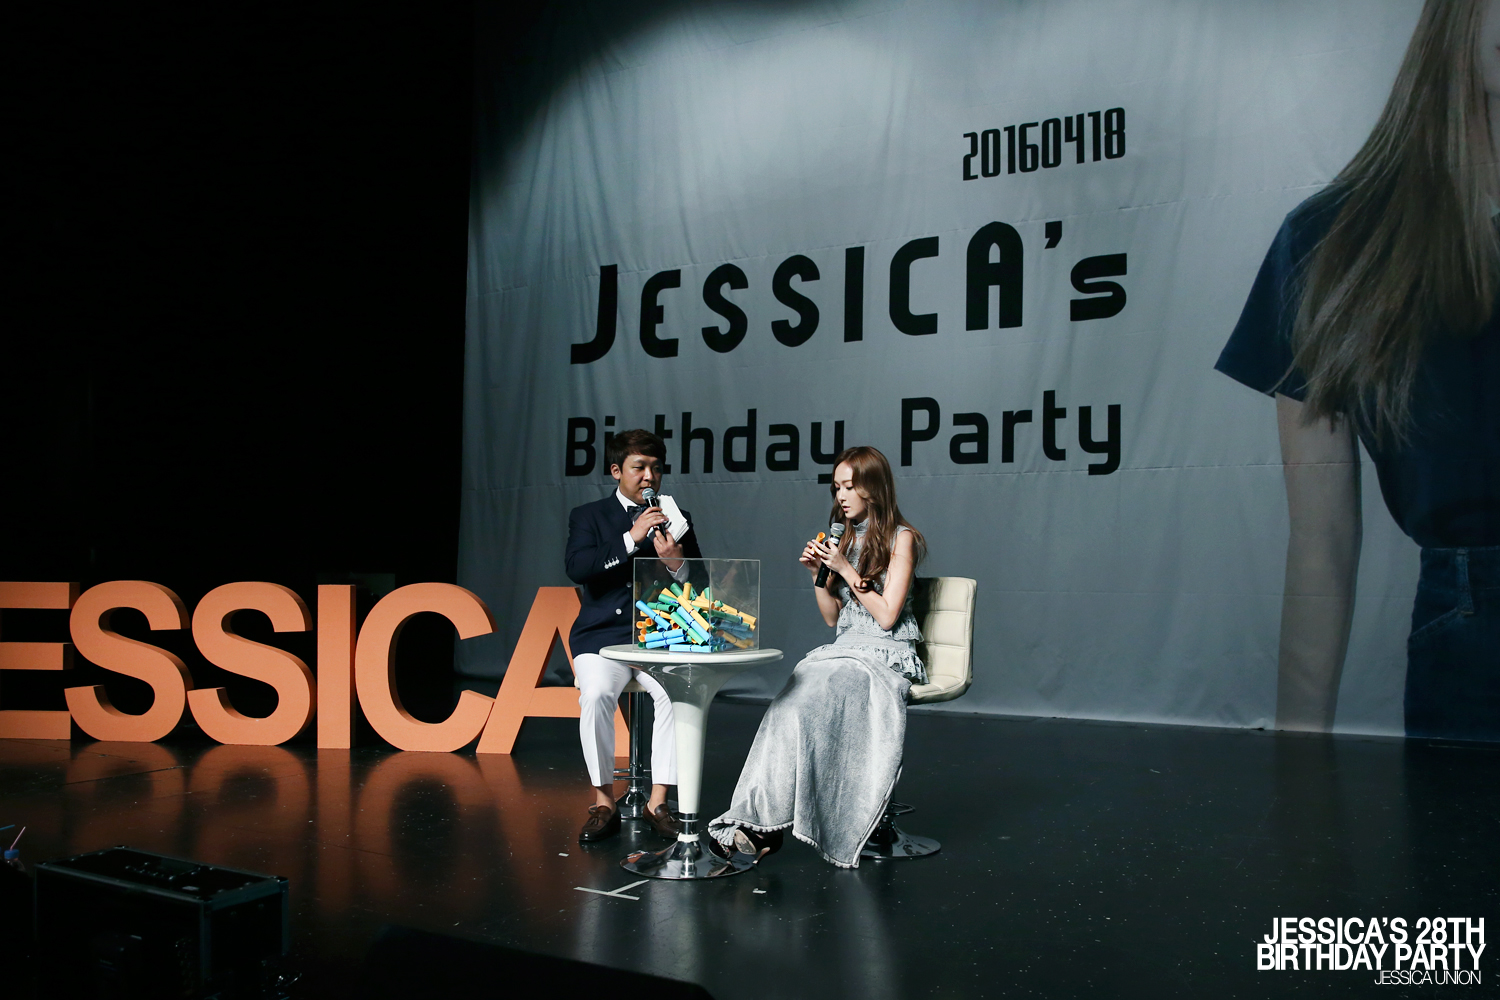 [PIC][17-04-2016]Jessica tham dự "JESSICA'S 28TH BIRTHDAY PARTY" vào tối nay 25986897244_f417b6a285_o